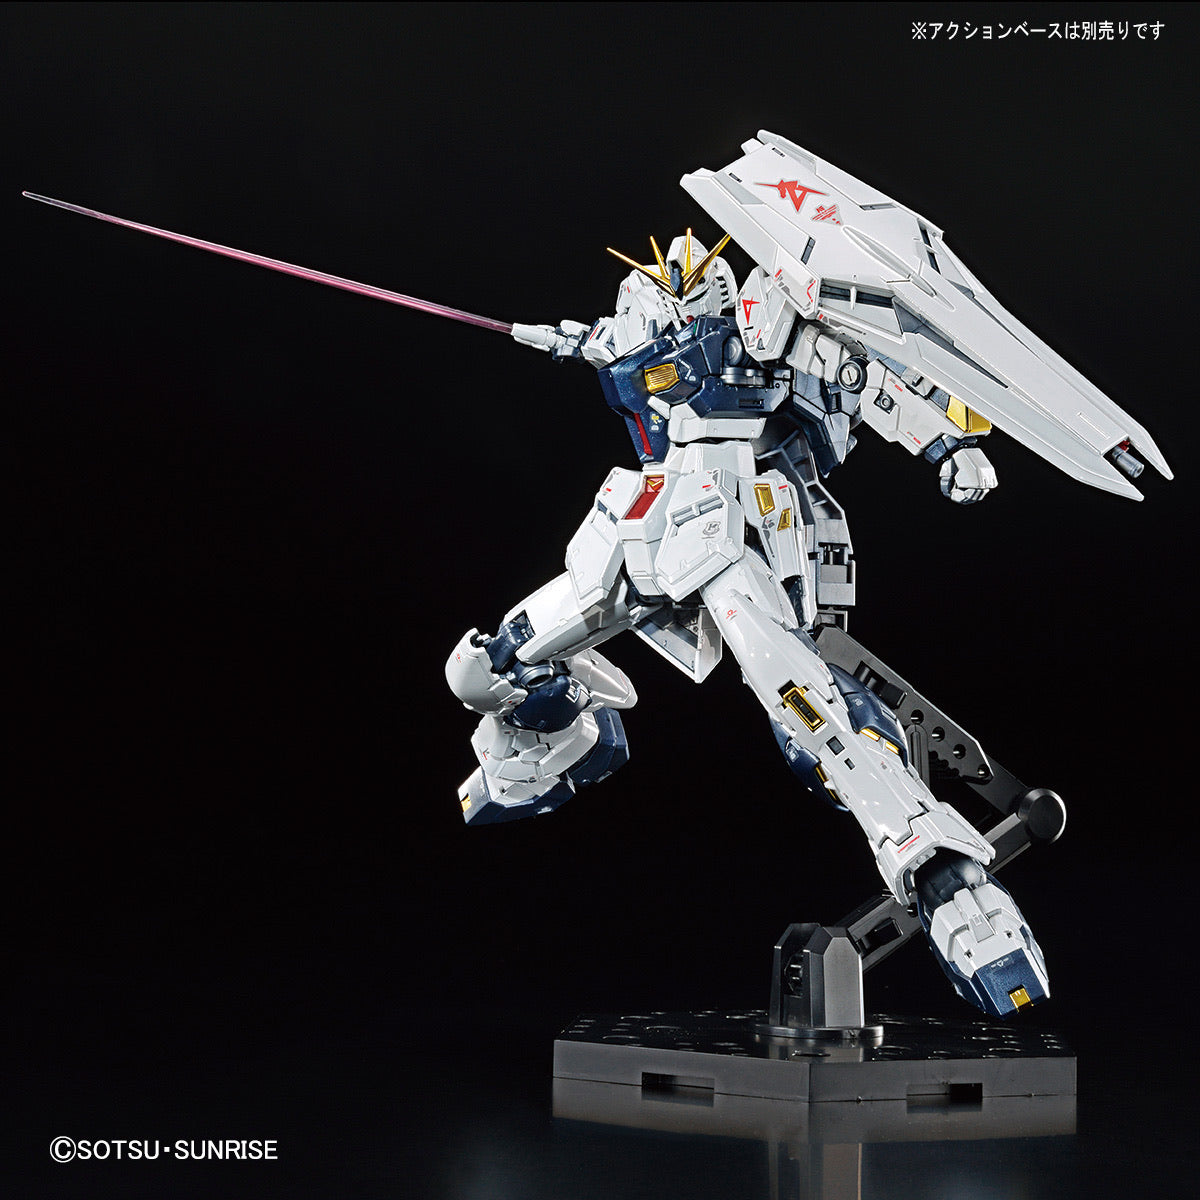 Gundam Base Limited RG 1/144 RX-93 nu Gundam [Titanium Finish]